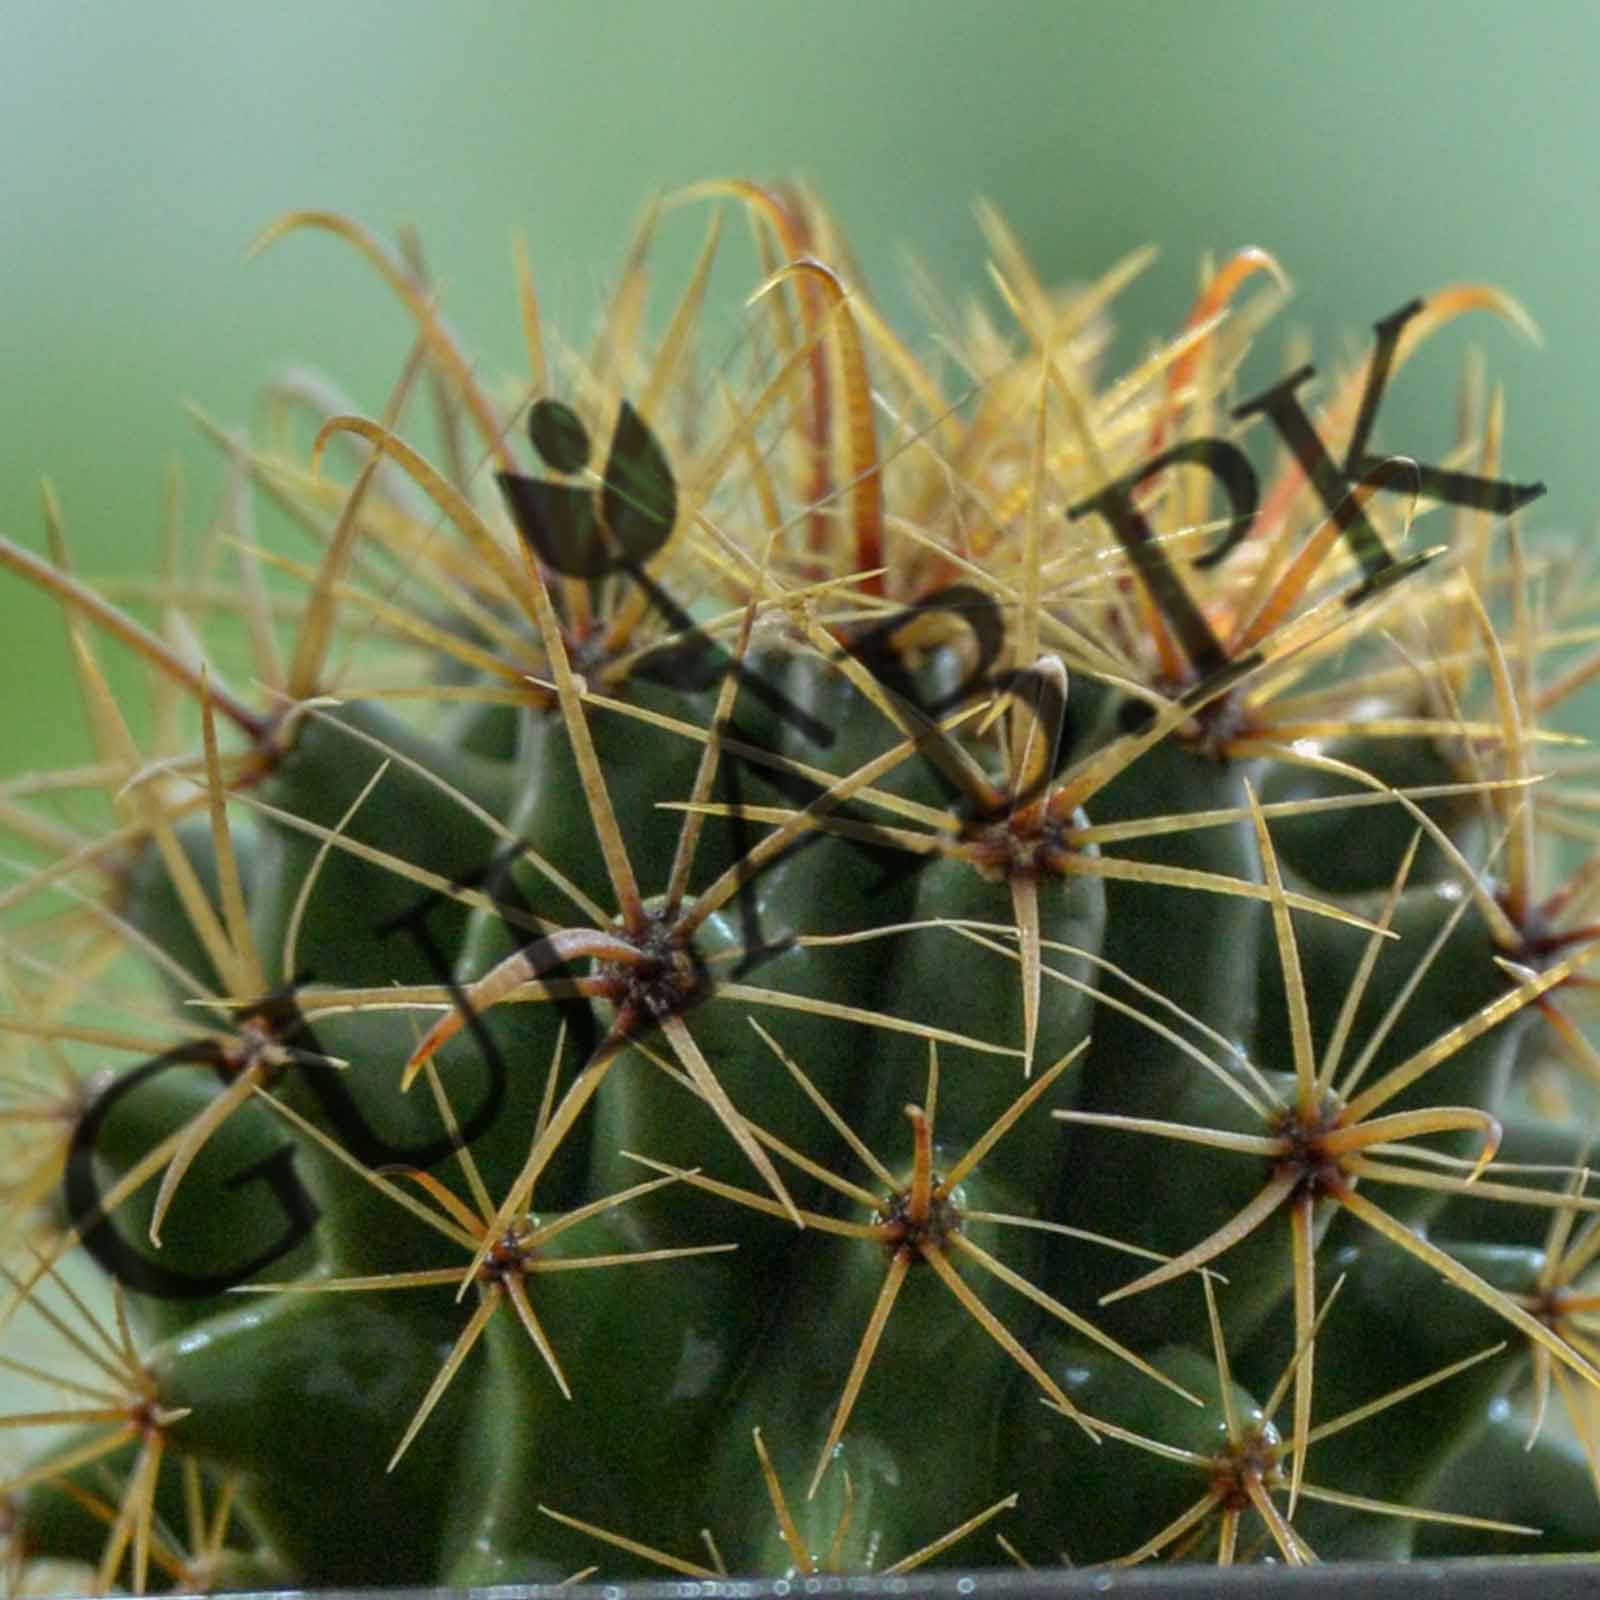 Fishhook Barrel Cactus, Unique Cactus Beauty